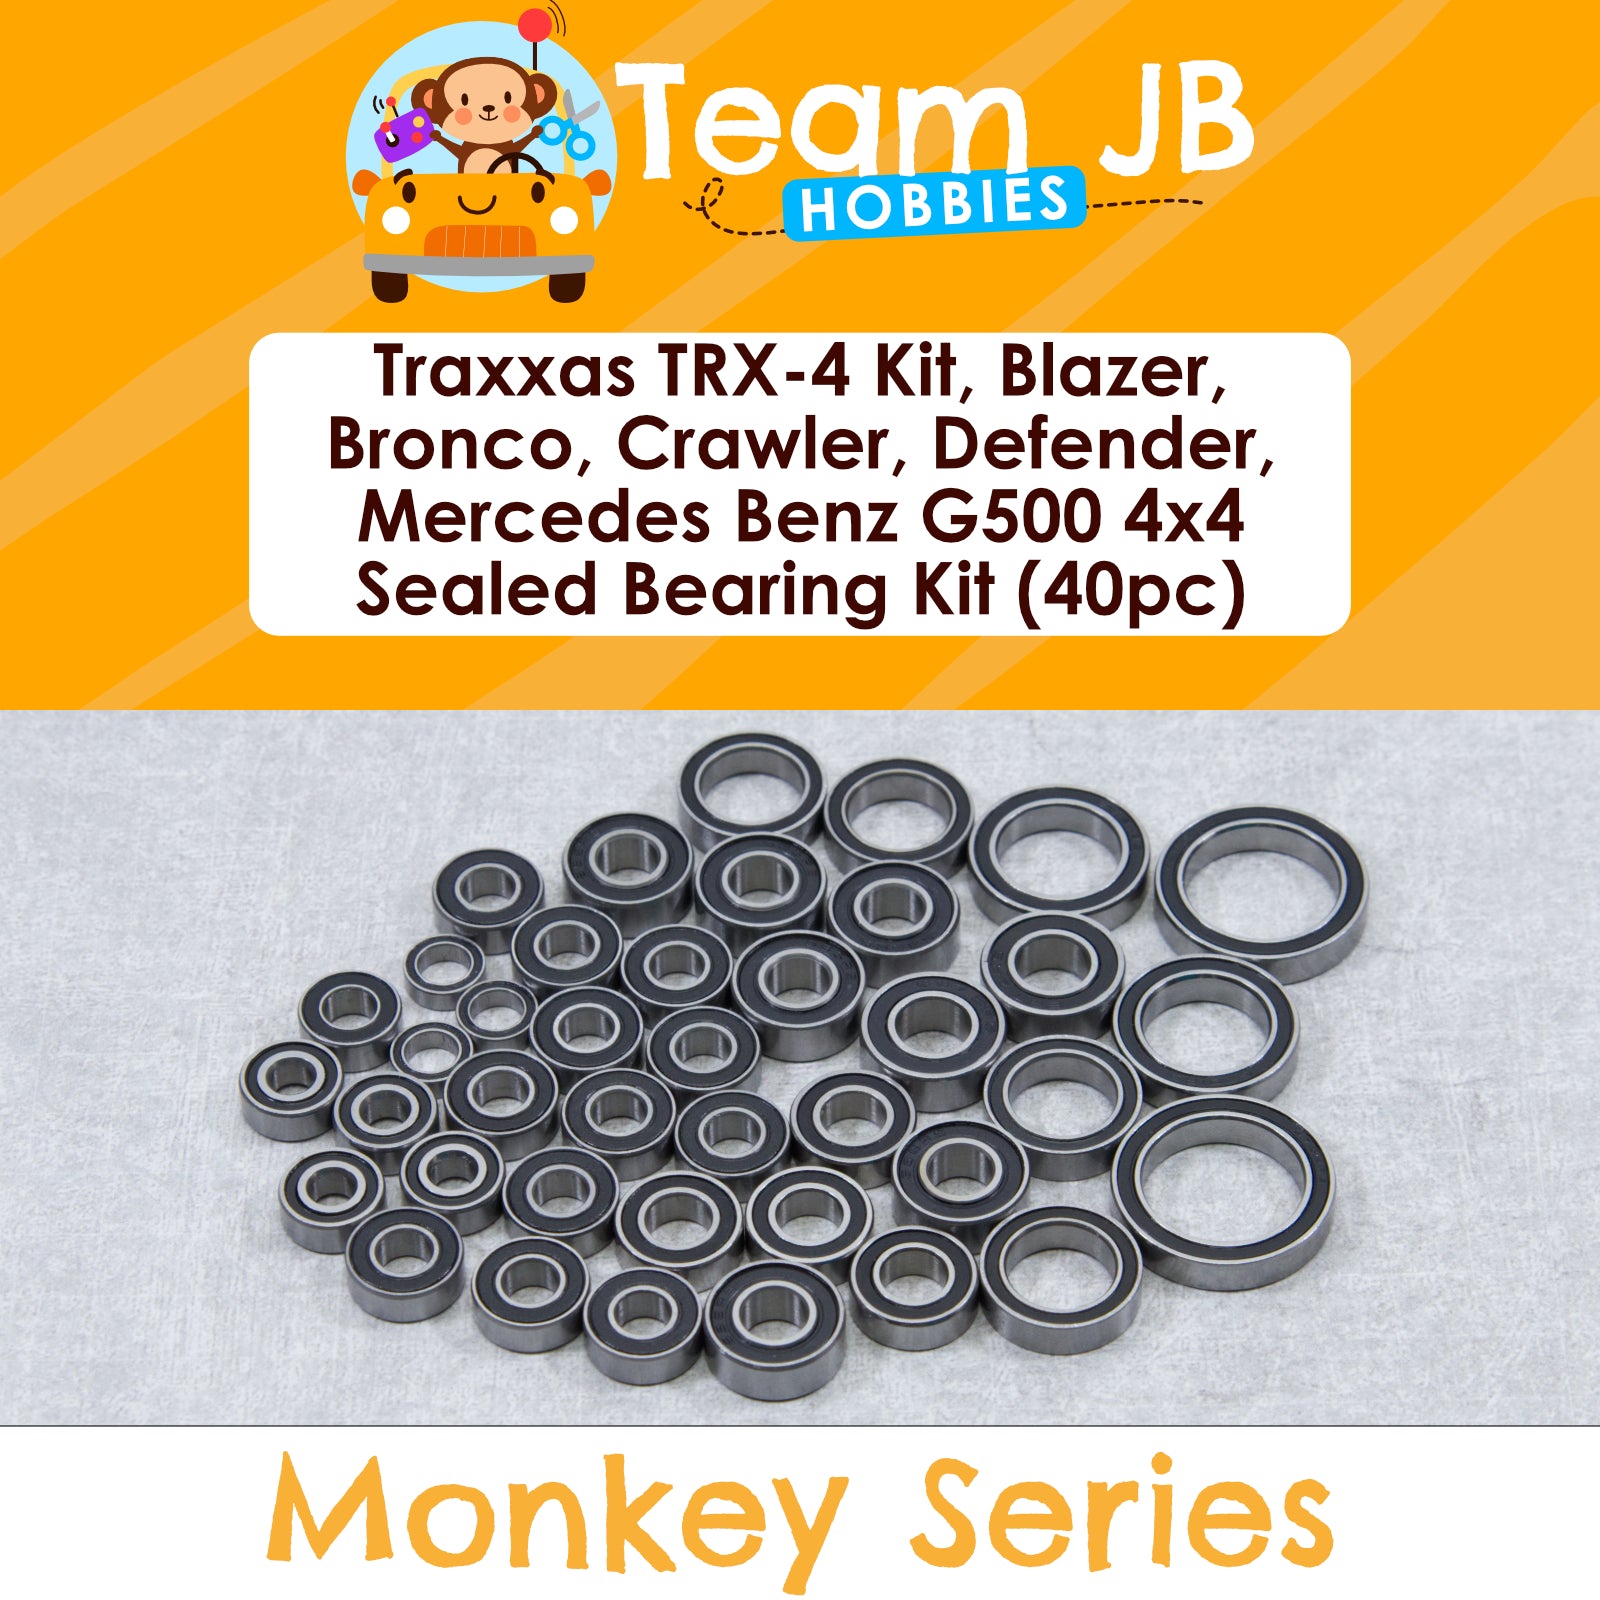 Traxxas TRX-4 Kit, K5 Blazer, Branco, Crawler, Defender, Mercedes Benz G500 4x4 - Sealed Bearing Kit